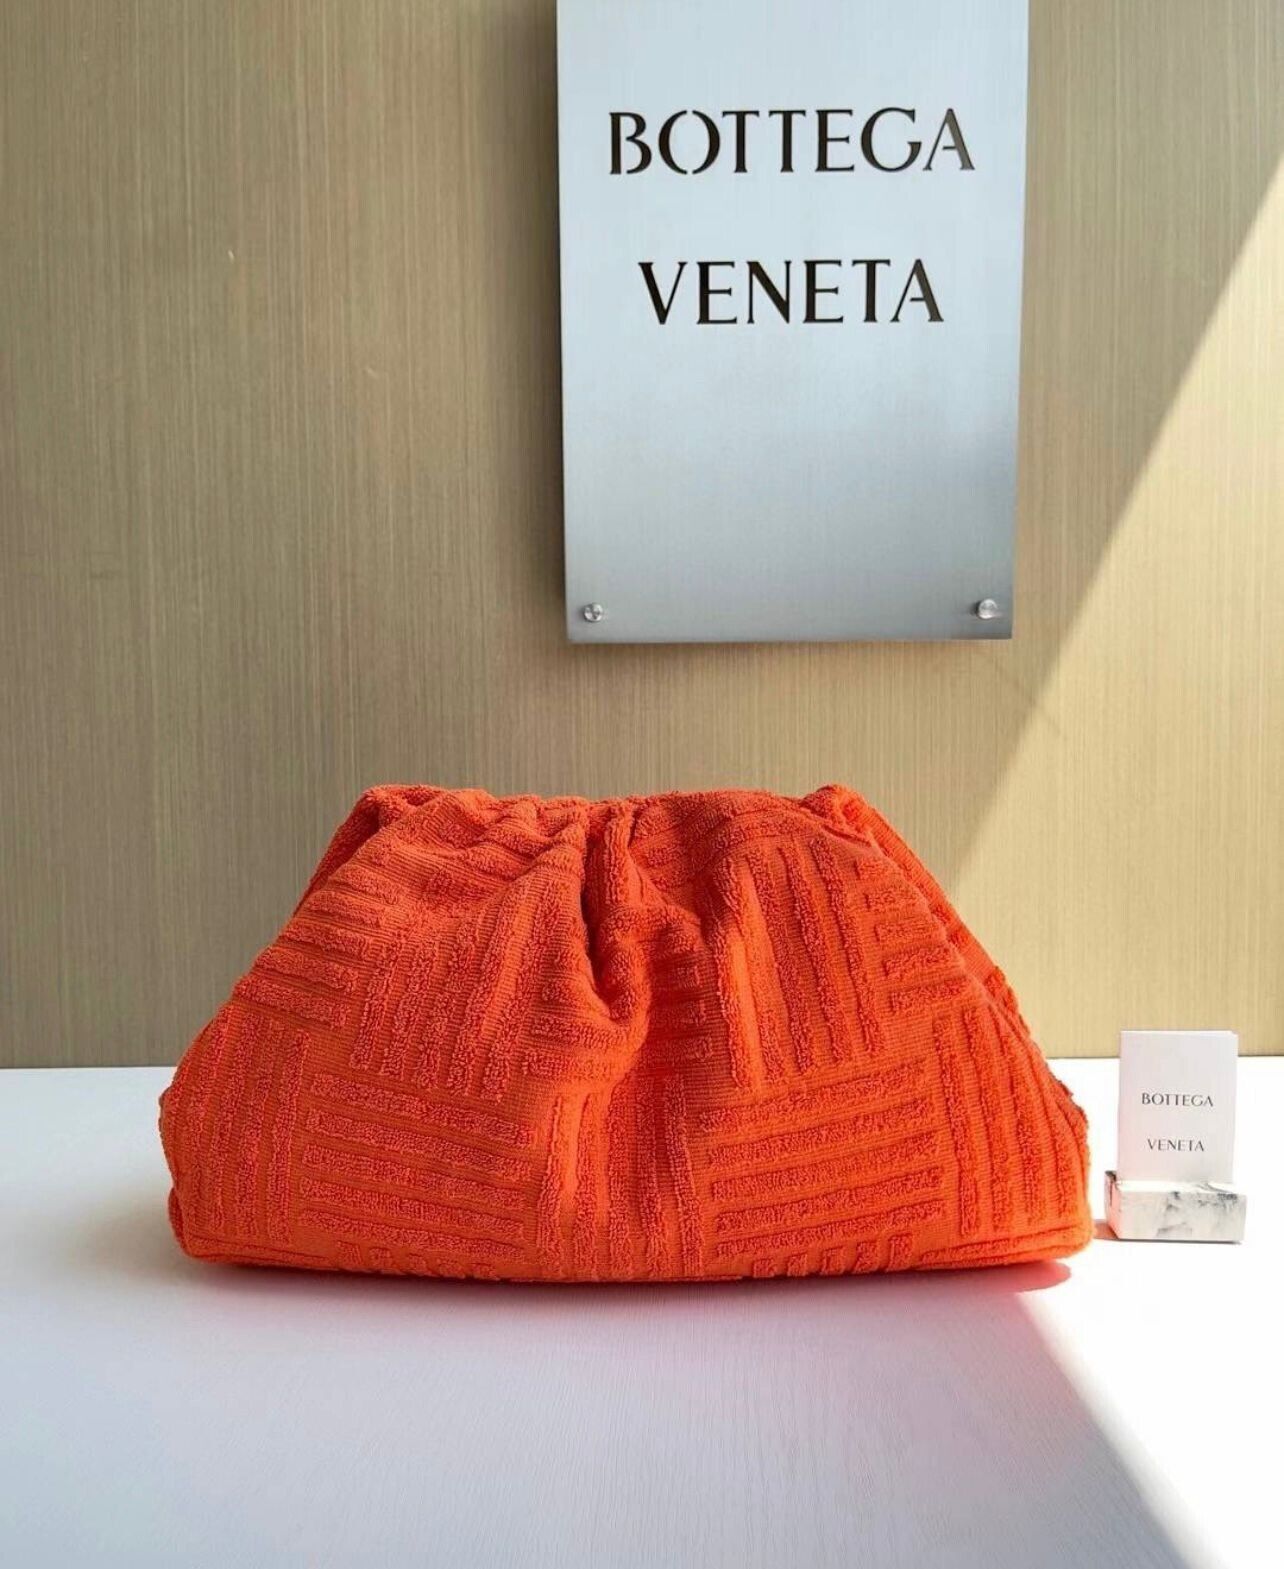  Bottega Veneta Teen Terry Pouch in Orange - Limited Edition